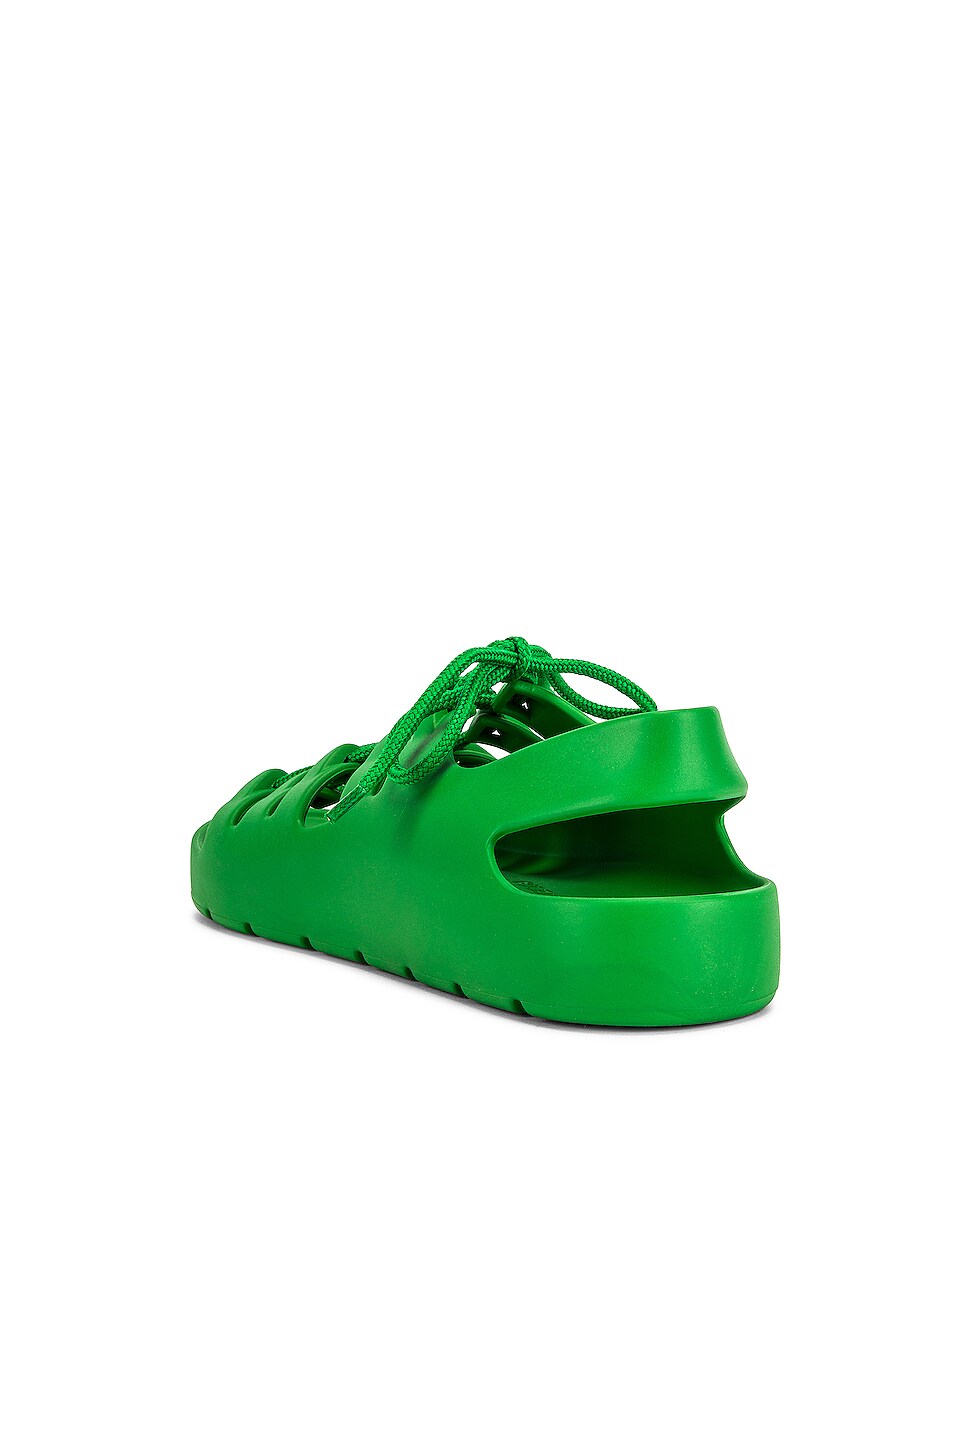 Bottega Veneta Jelly Lace Up Sandals in Grass | FWRD